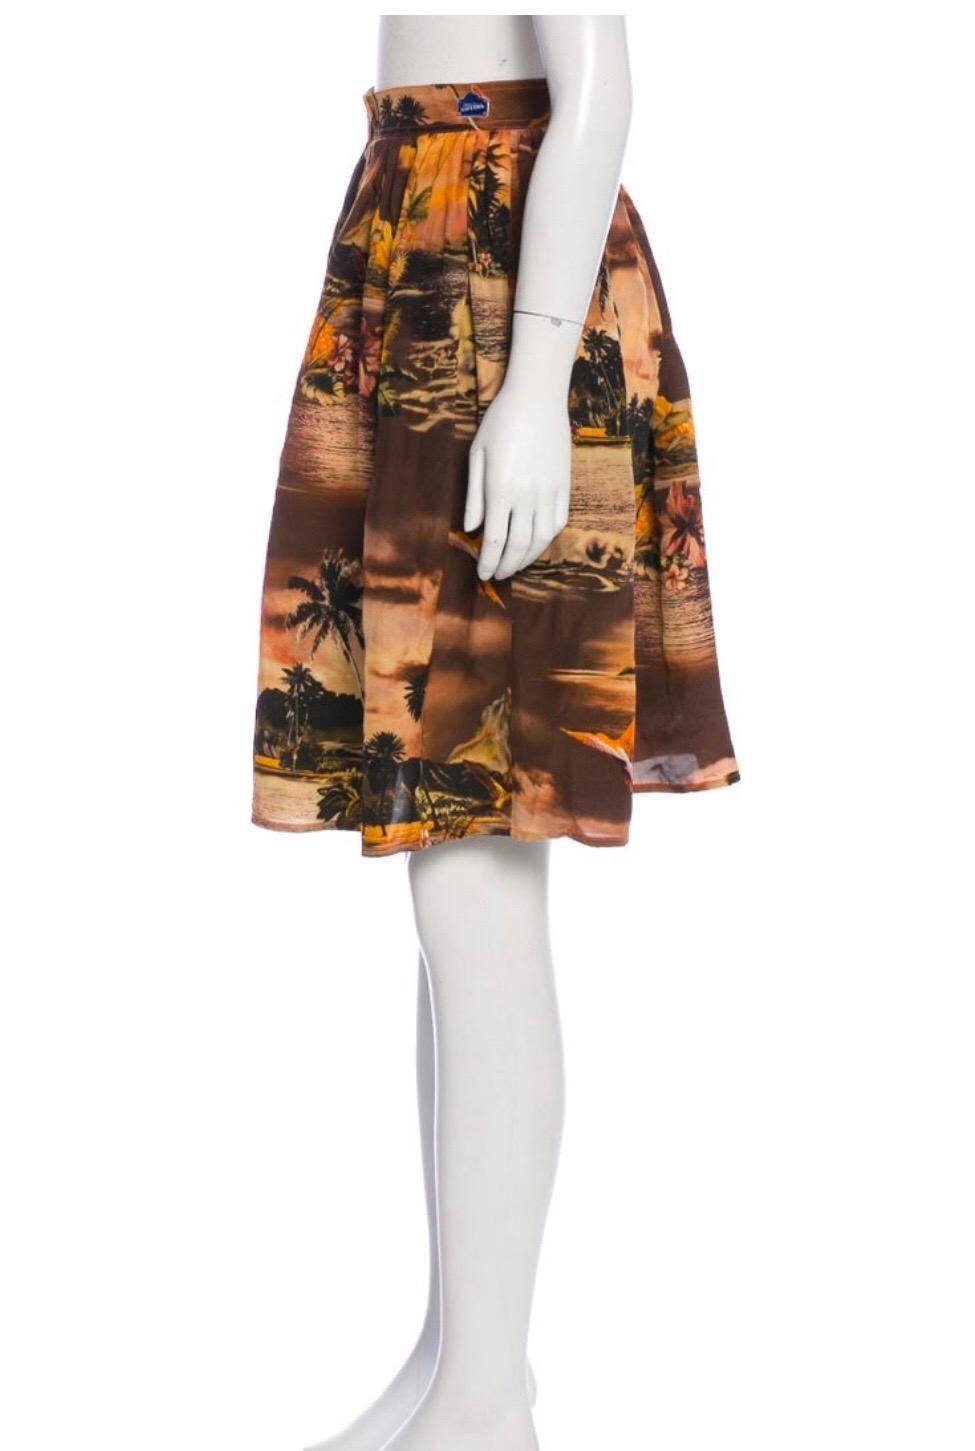 Brown Jean Paul Gaultier Island Print Mini Skirt